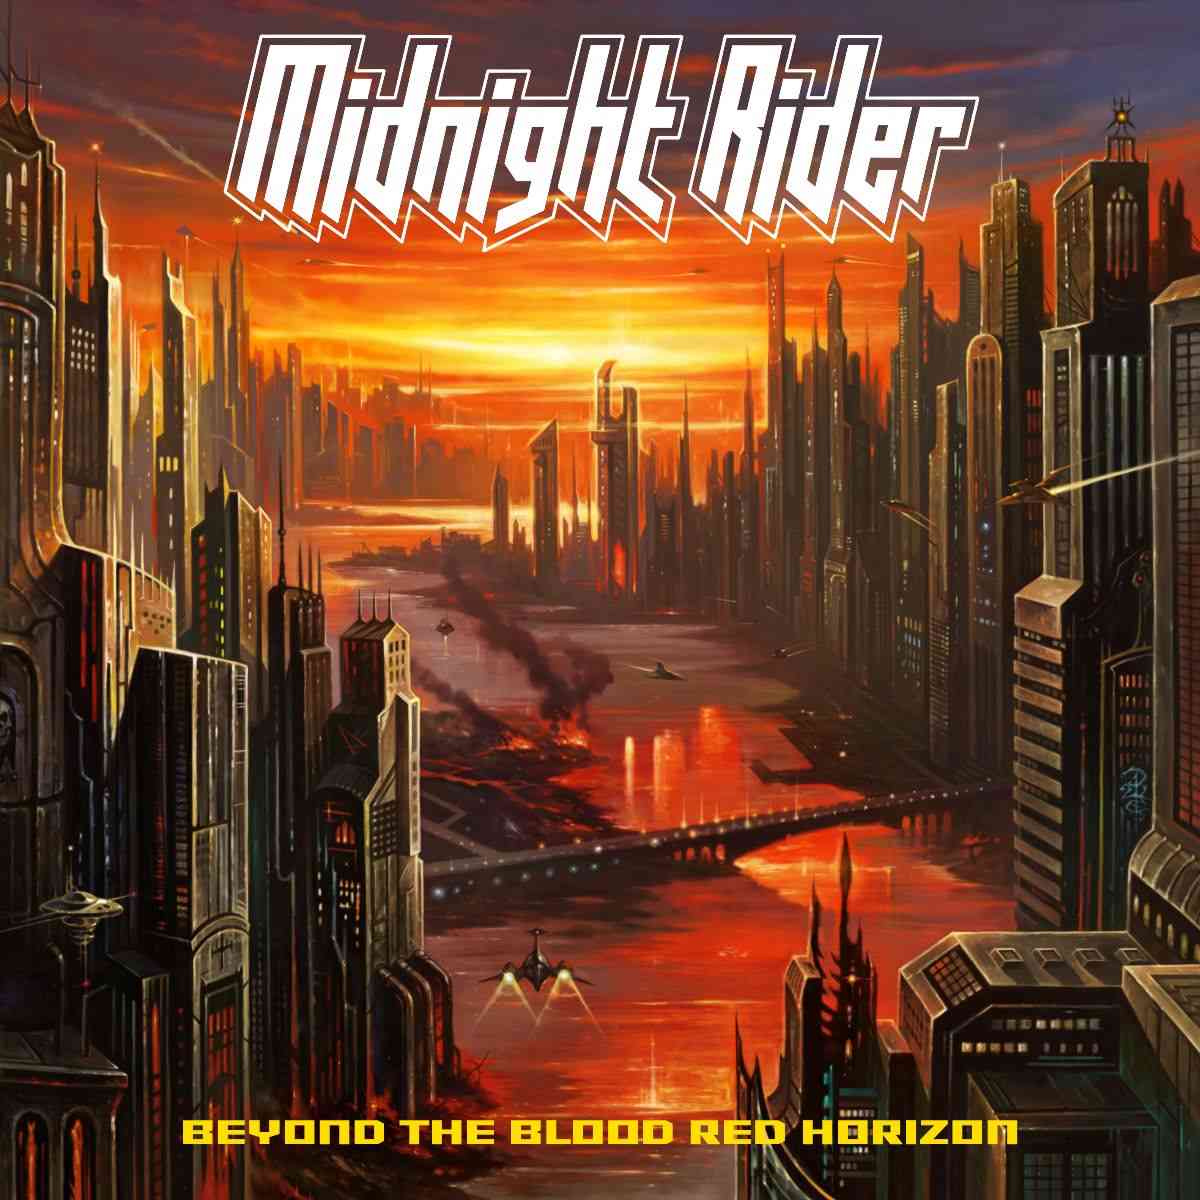 midnight-rider-Beyond-The-Blood-Red-Horizon-album-cover